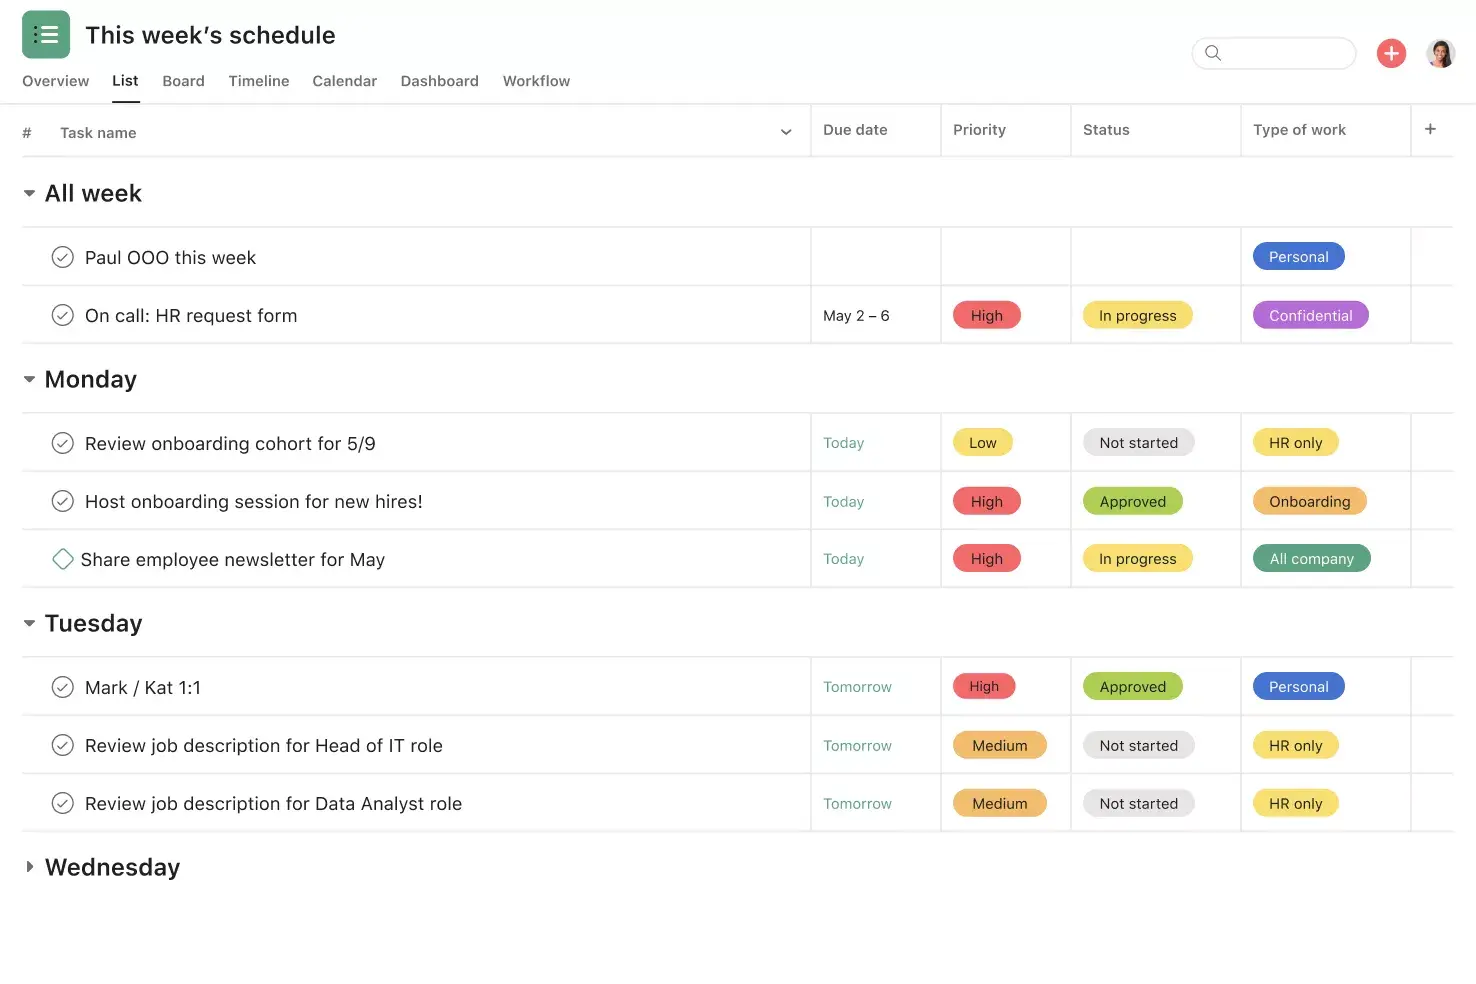 [Interface do produto] Agenda semanal ordenada por prioridade, status e tipo de trabalho (formato de lista)